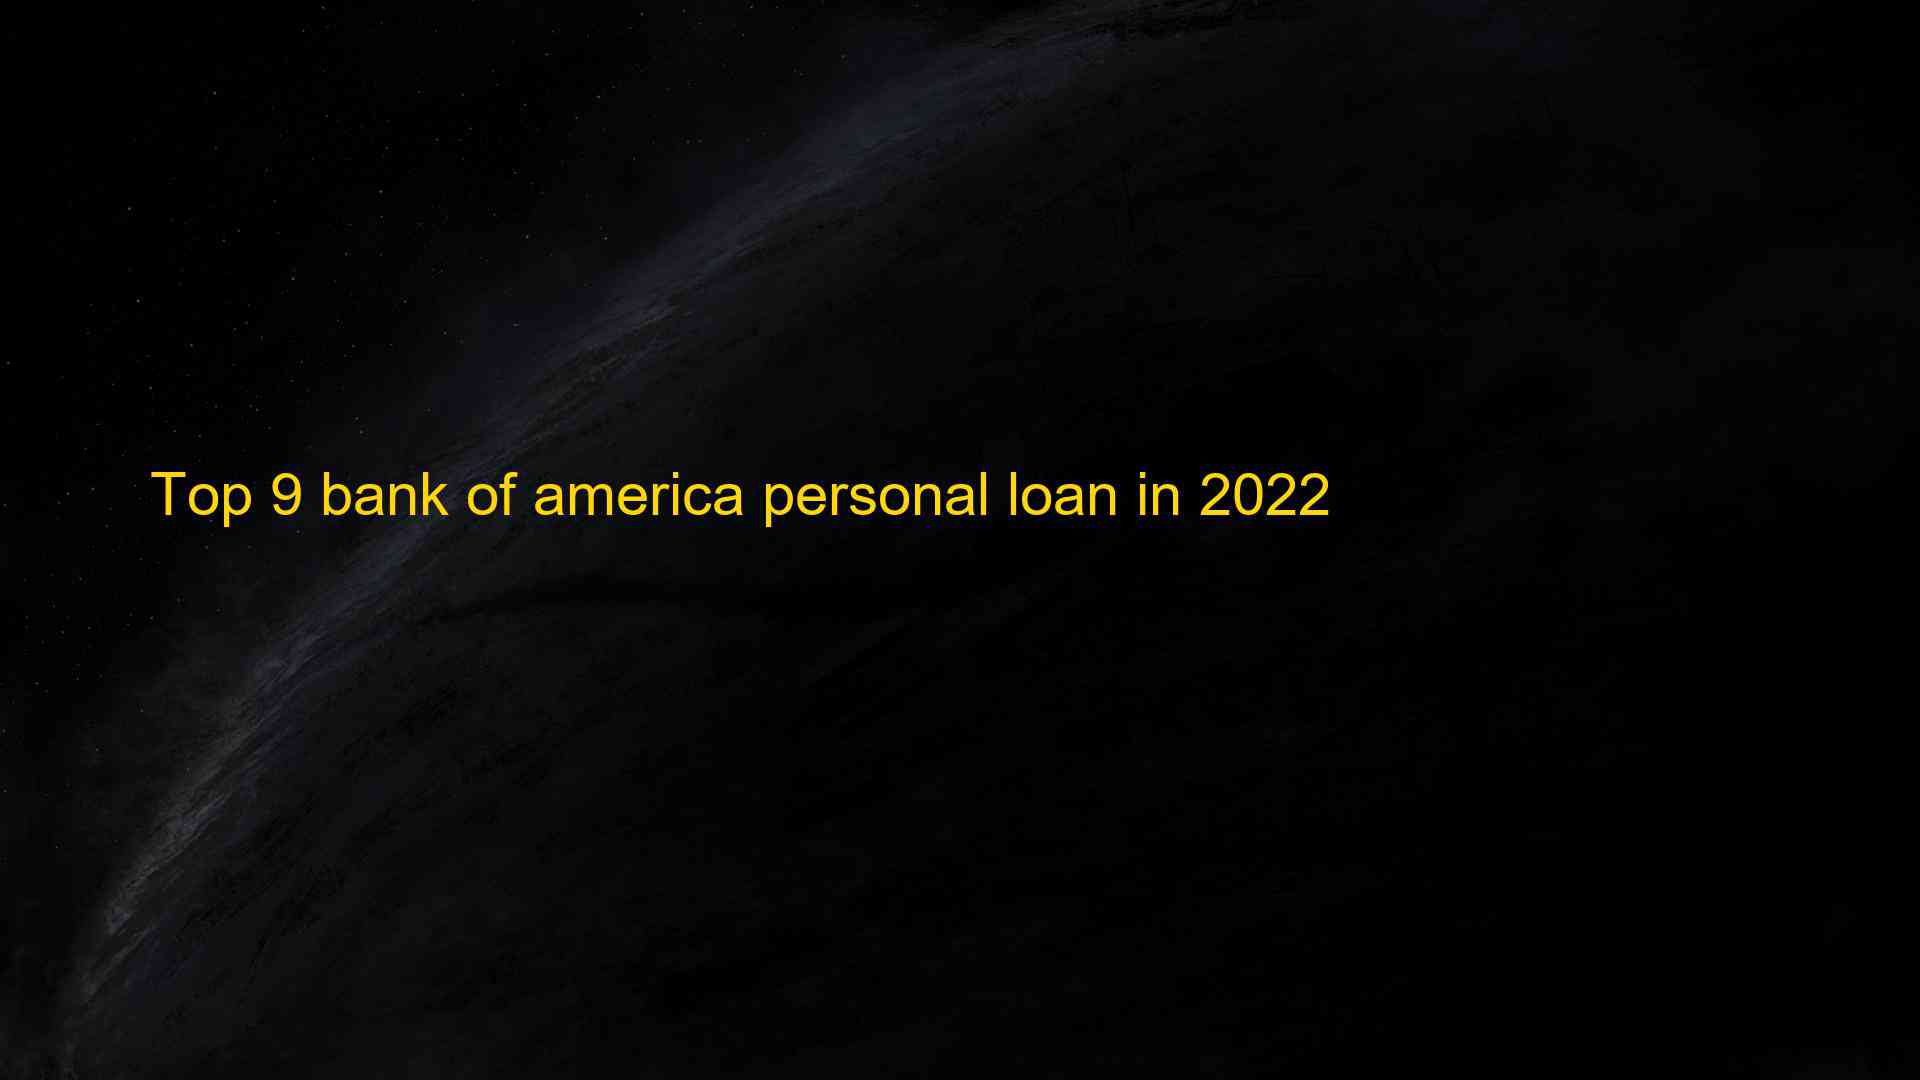 Top 9 bank of america personal loan in 2022 1659575283